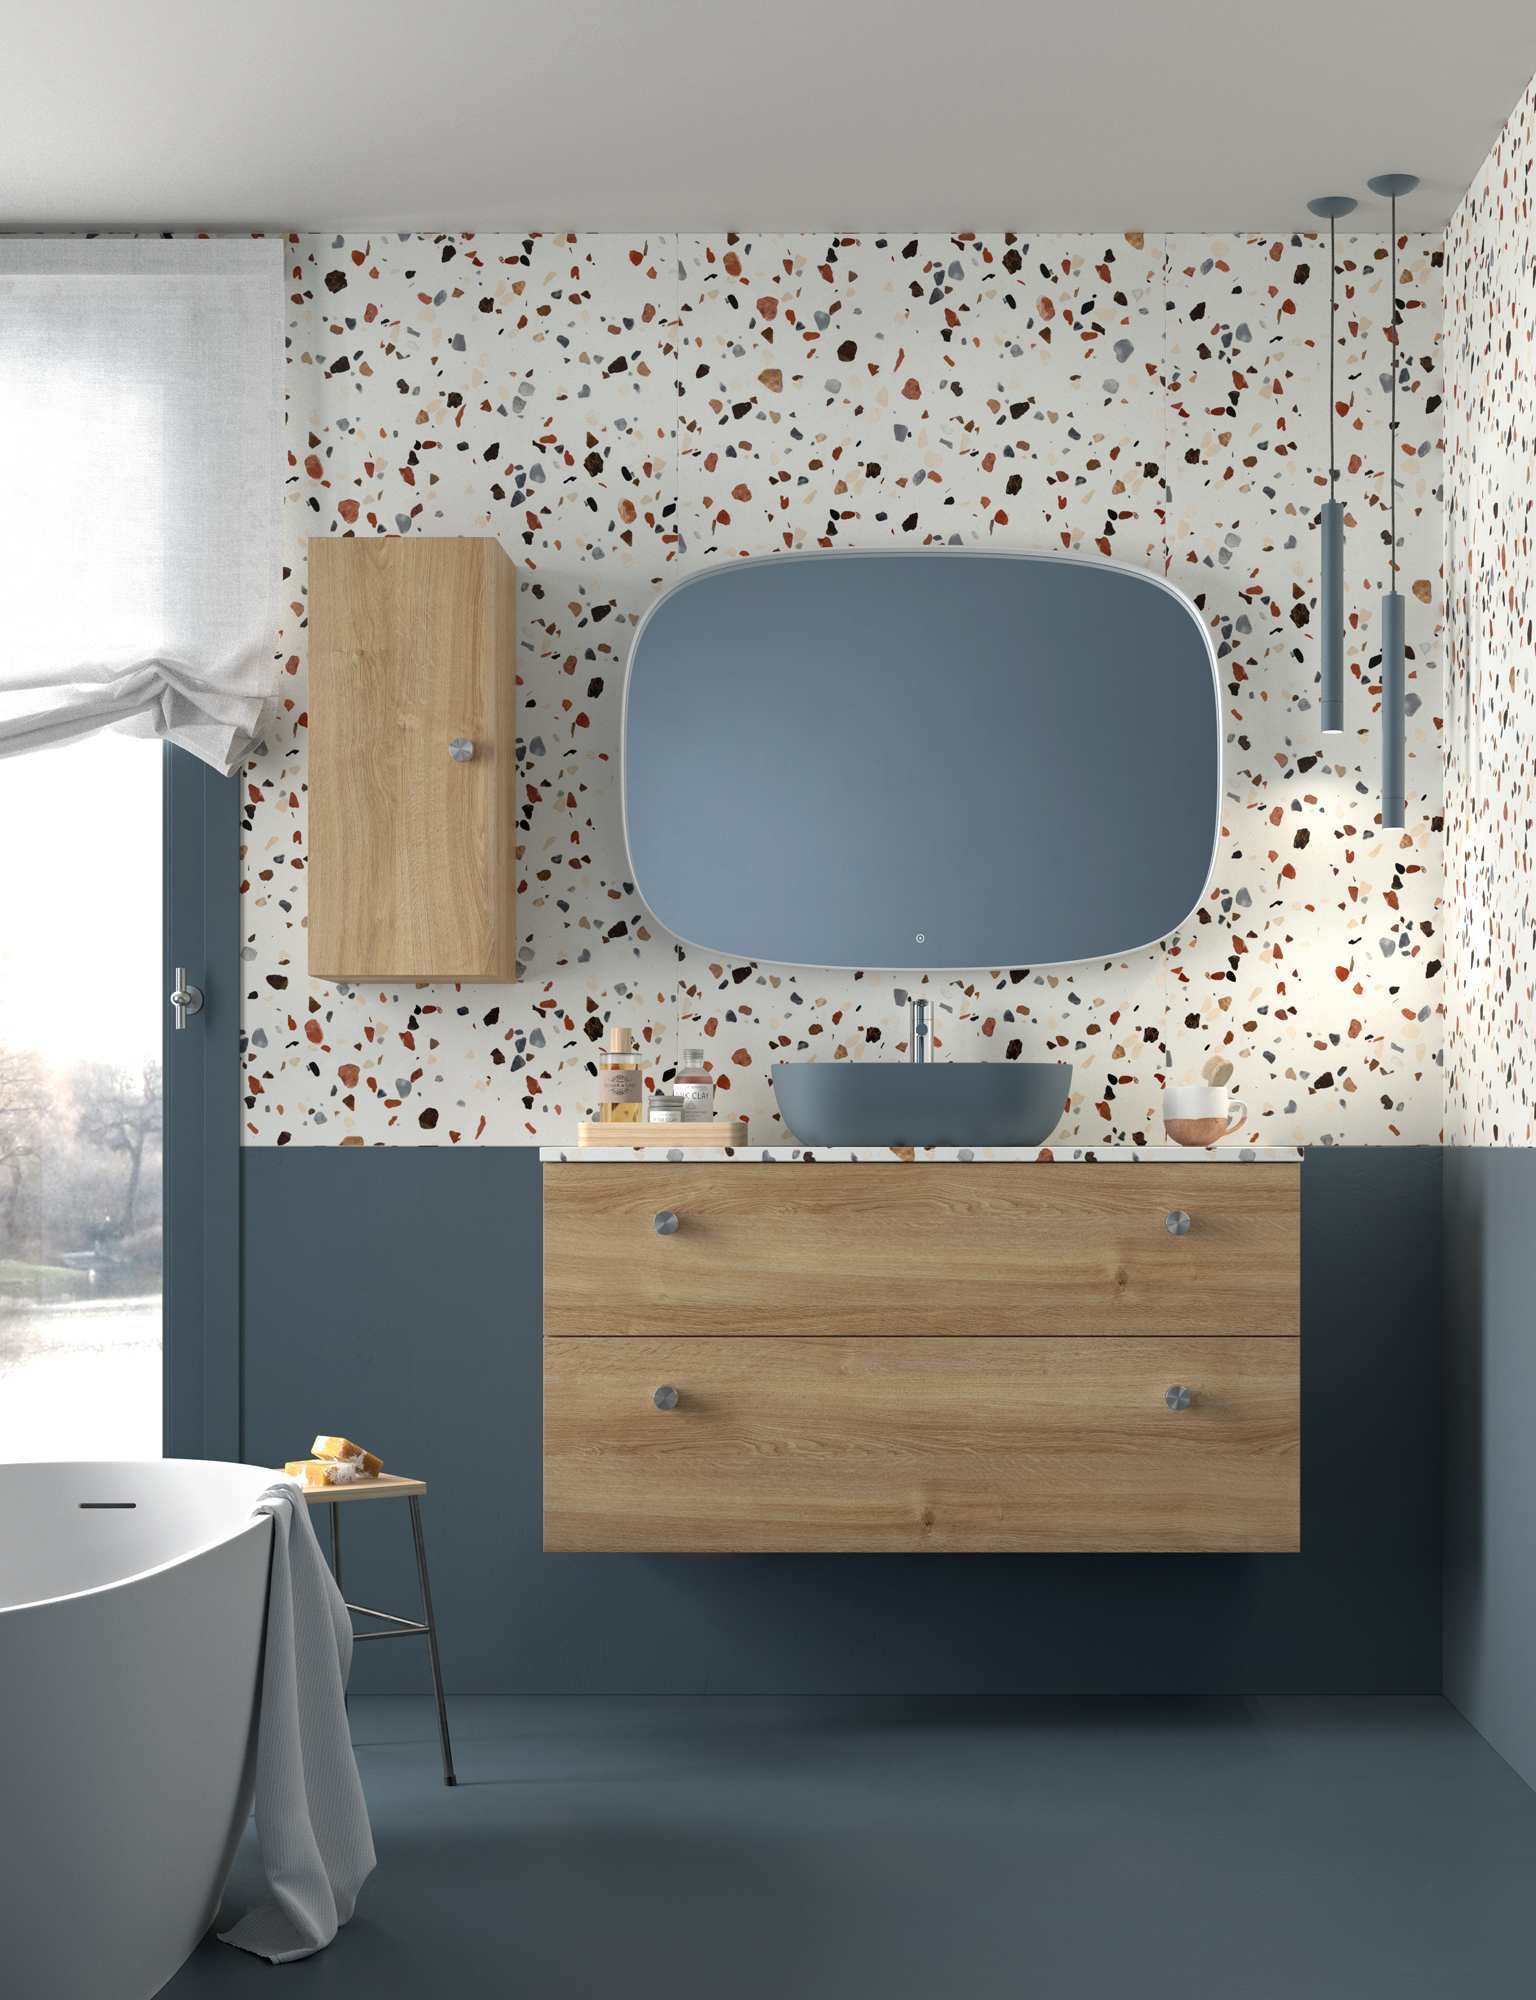 Conjunto mueble baño con lavabo Carmen madera n5 Avila Dos — Azulejossola